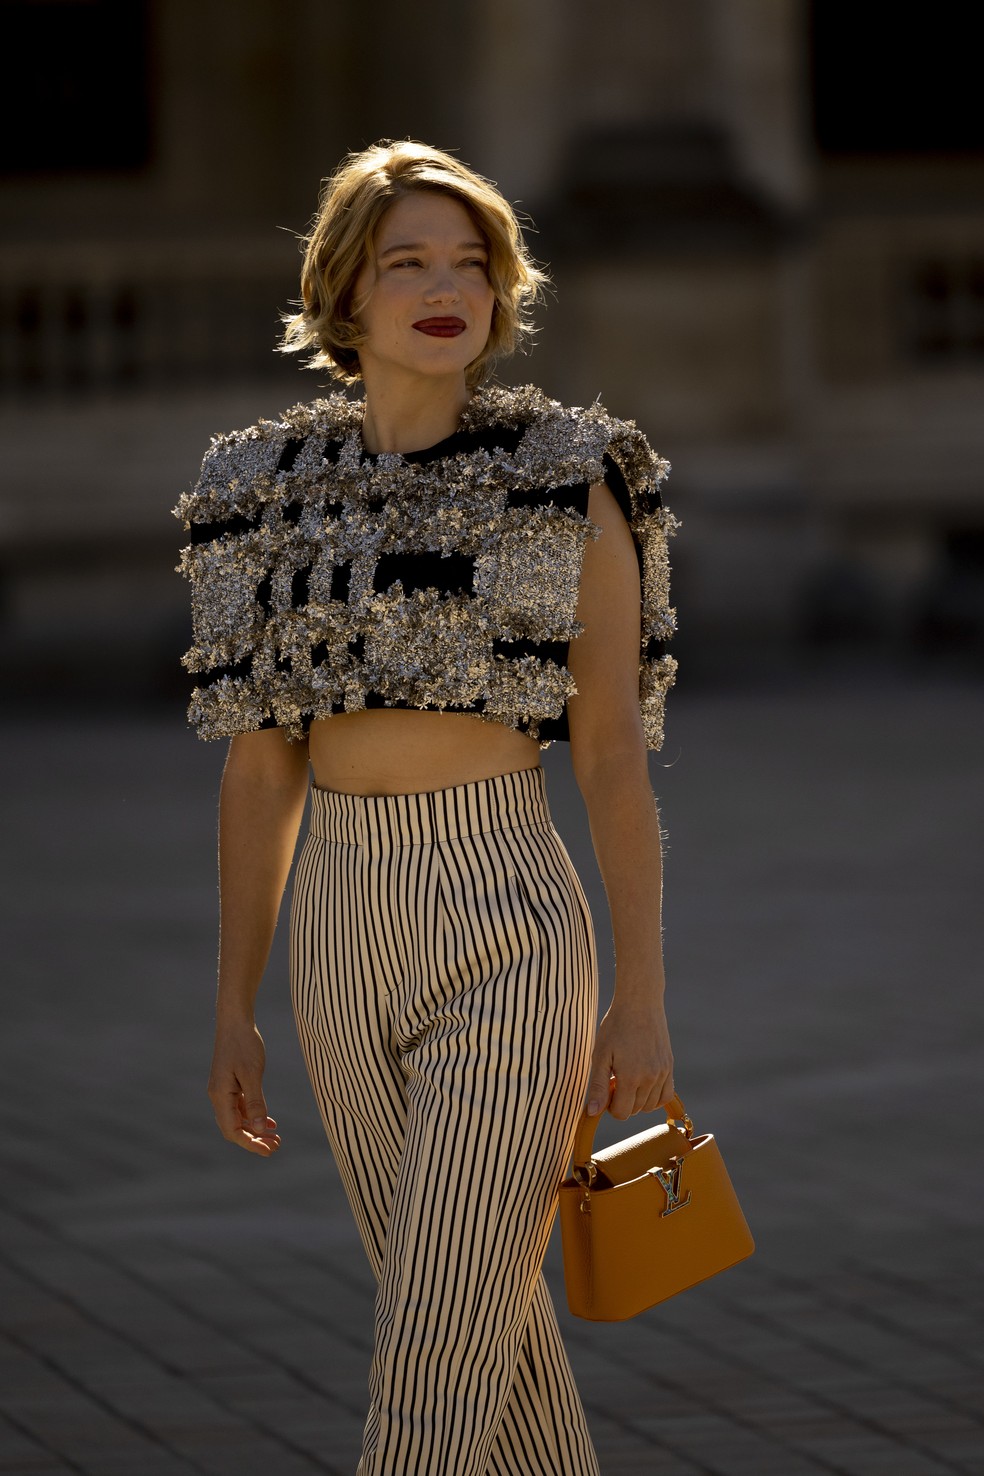 Street style, semana de moda de Paris — Foto: IMAXTree